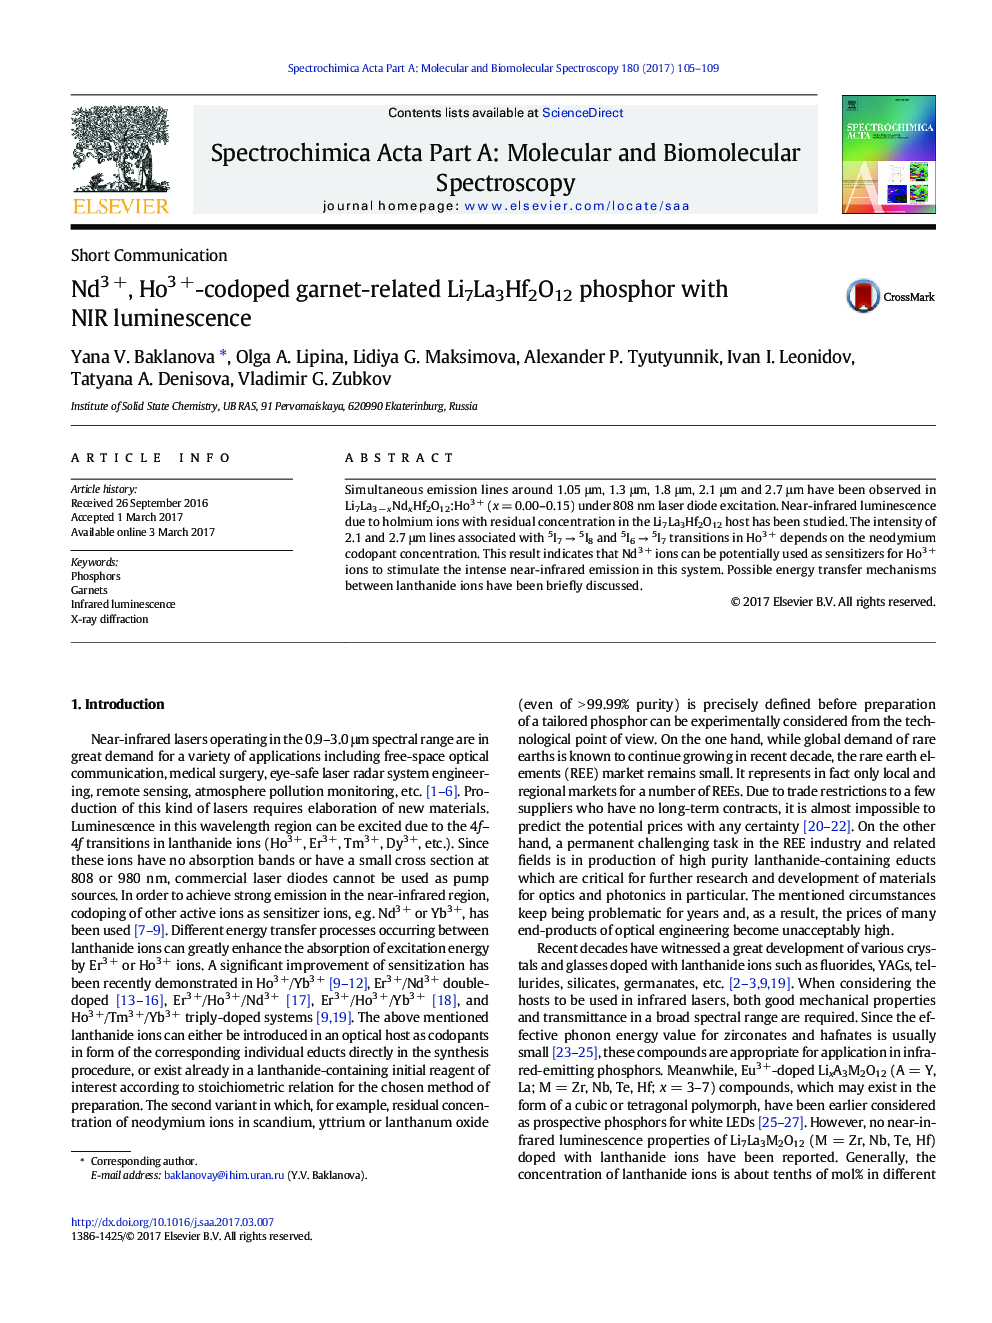 Short CommunicationNd3Â +, Ho3Â +-codoped garnet-related Li7La3Hf2O12 phosphor with NIR luminescence